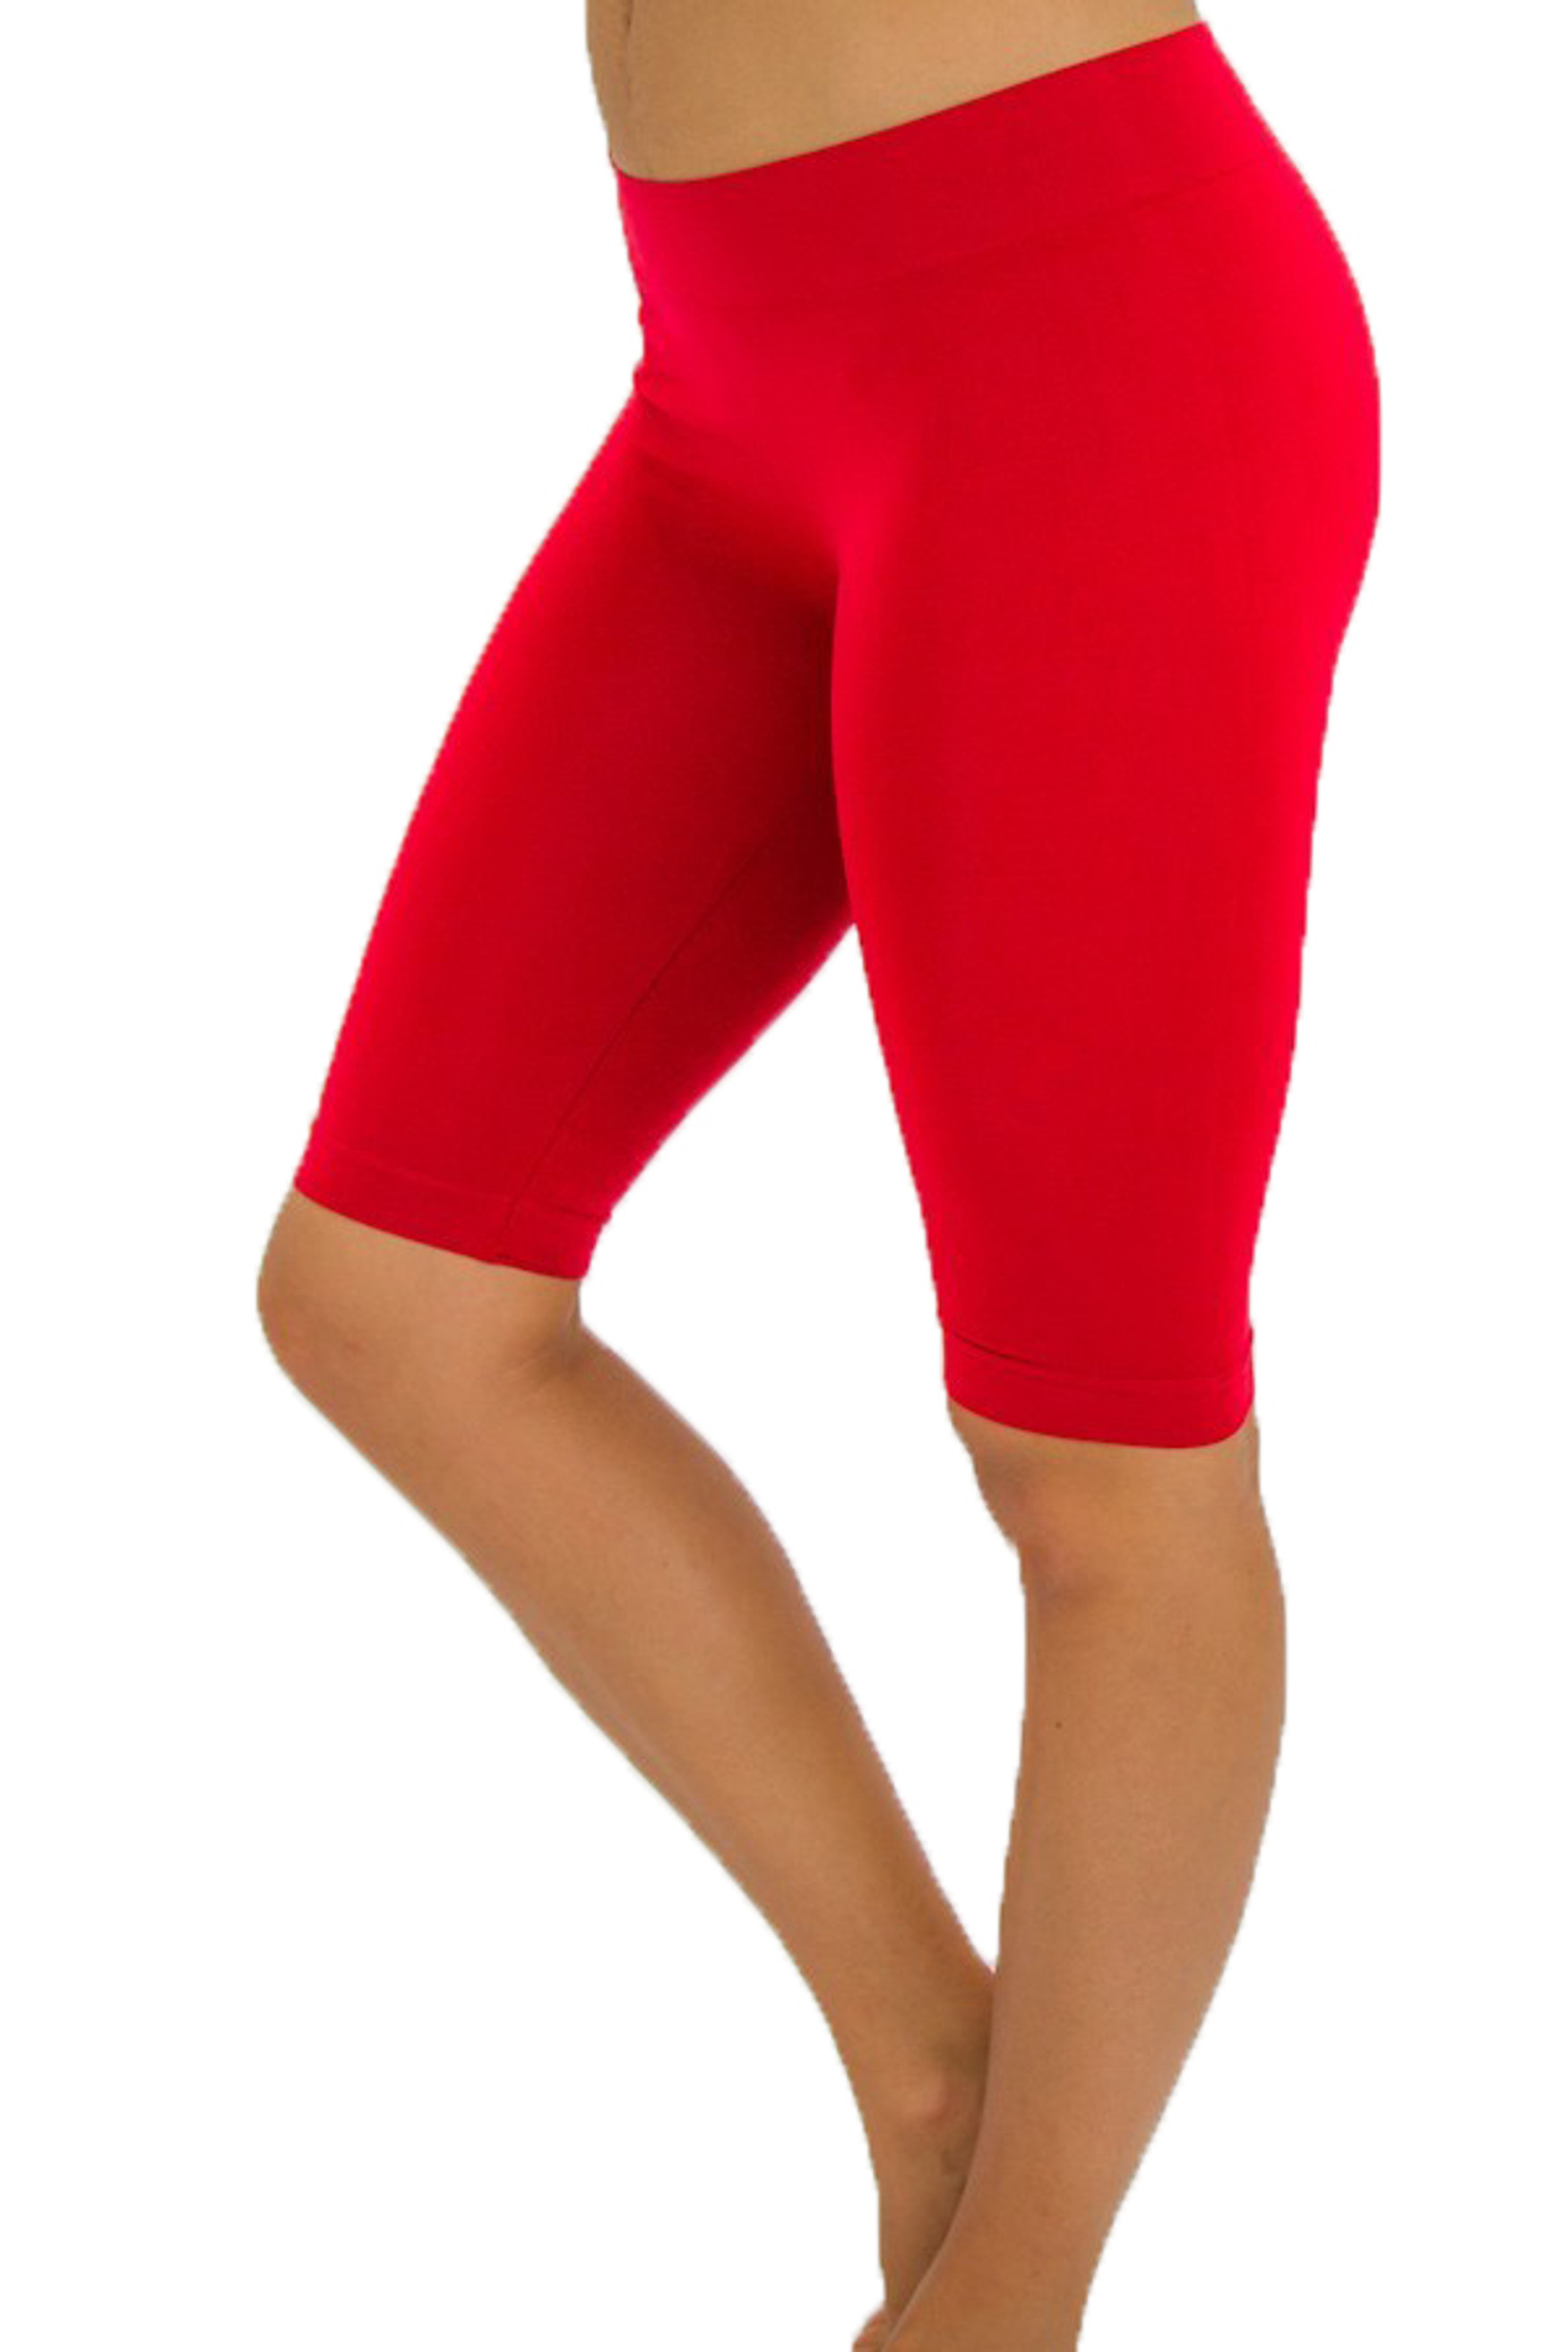 Red Basic Nylon Spandex Biker Shorts - Plus Size